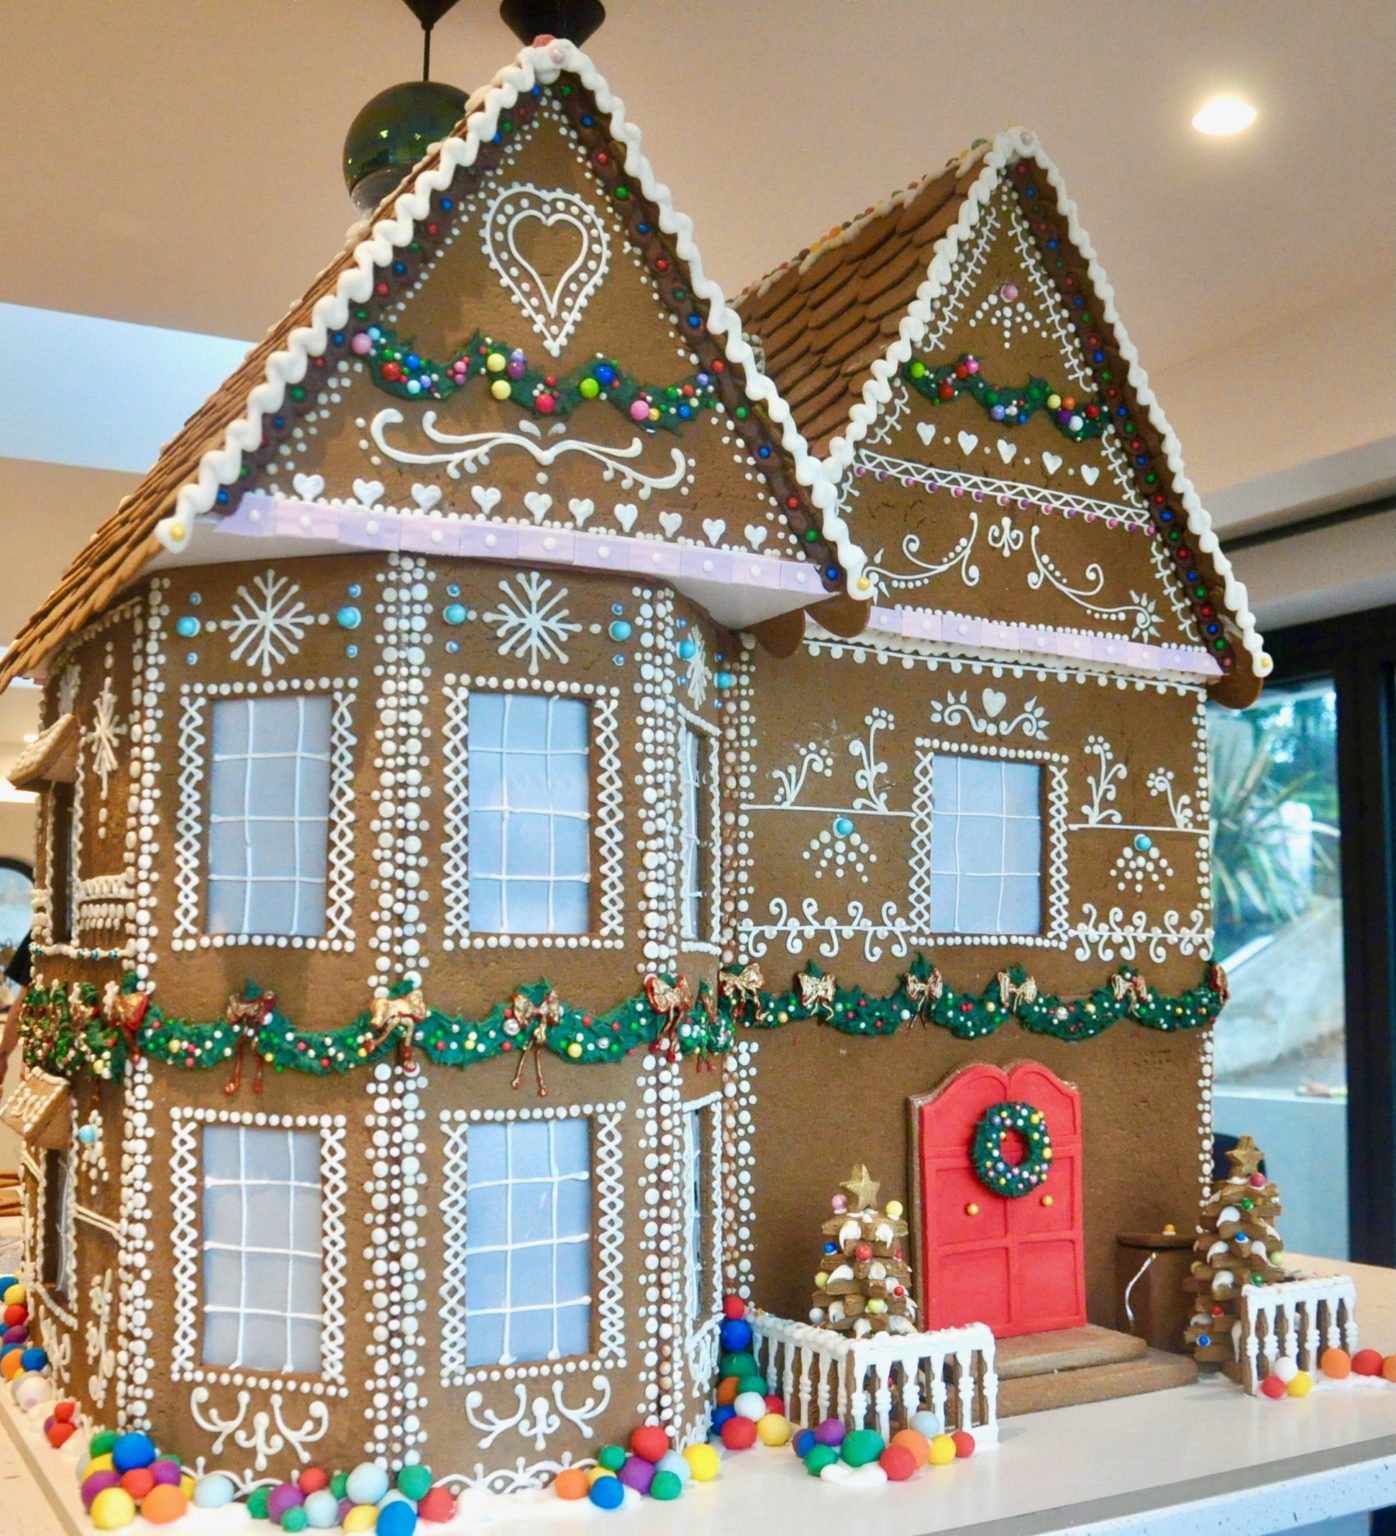 Biggest Gingerbread House We've Ever Made! | Gingerbread World